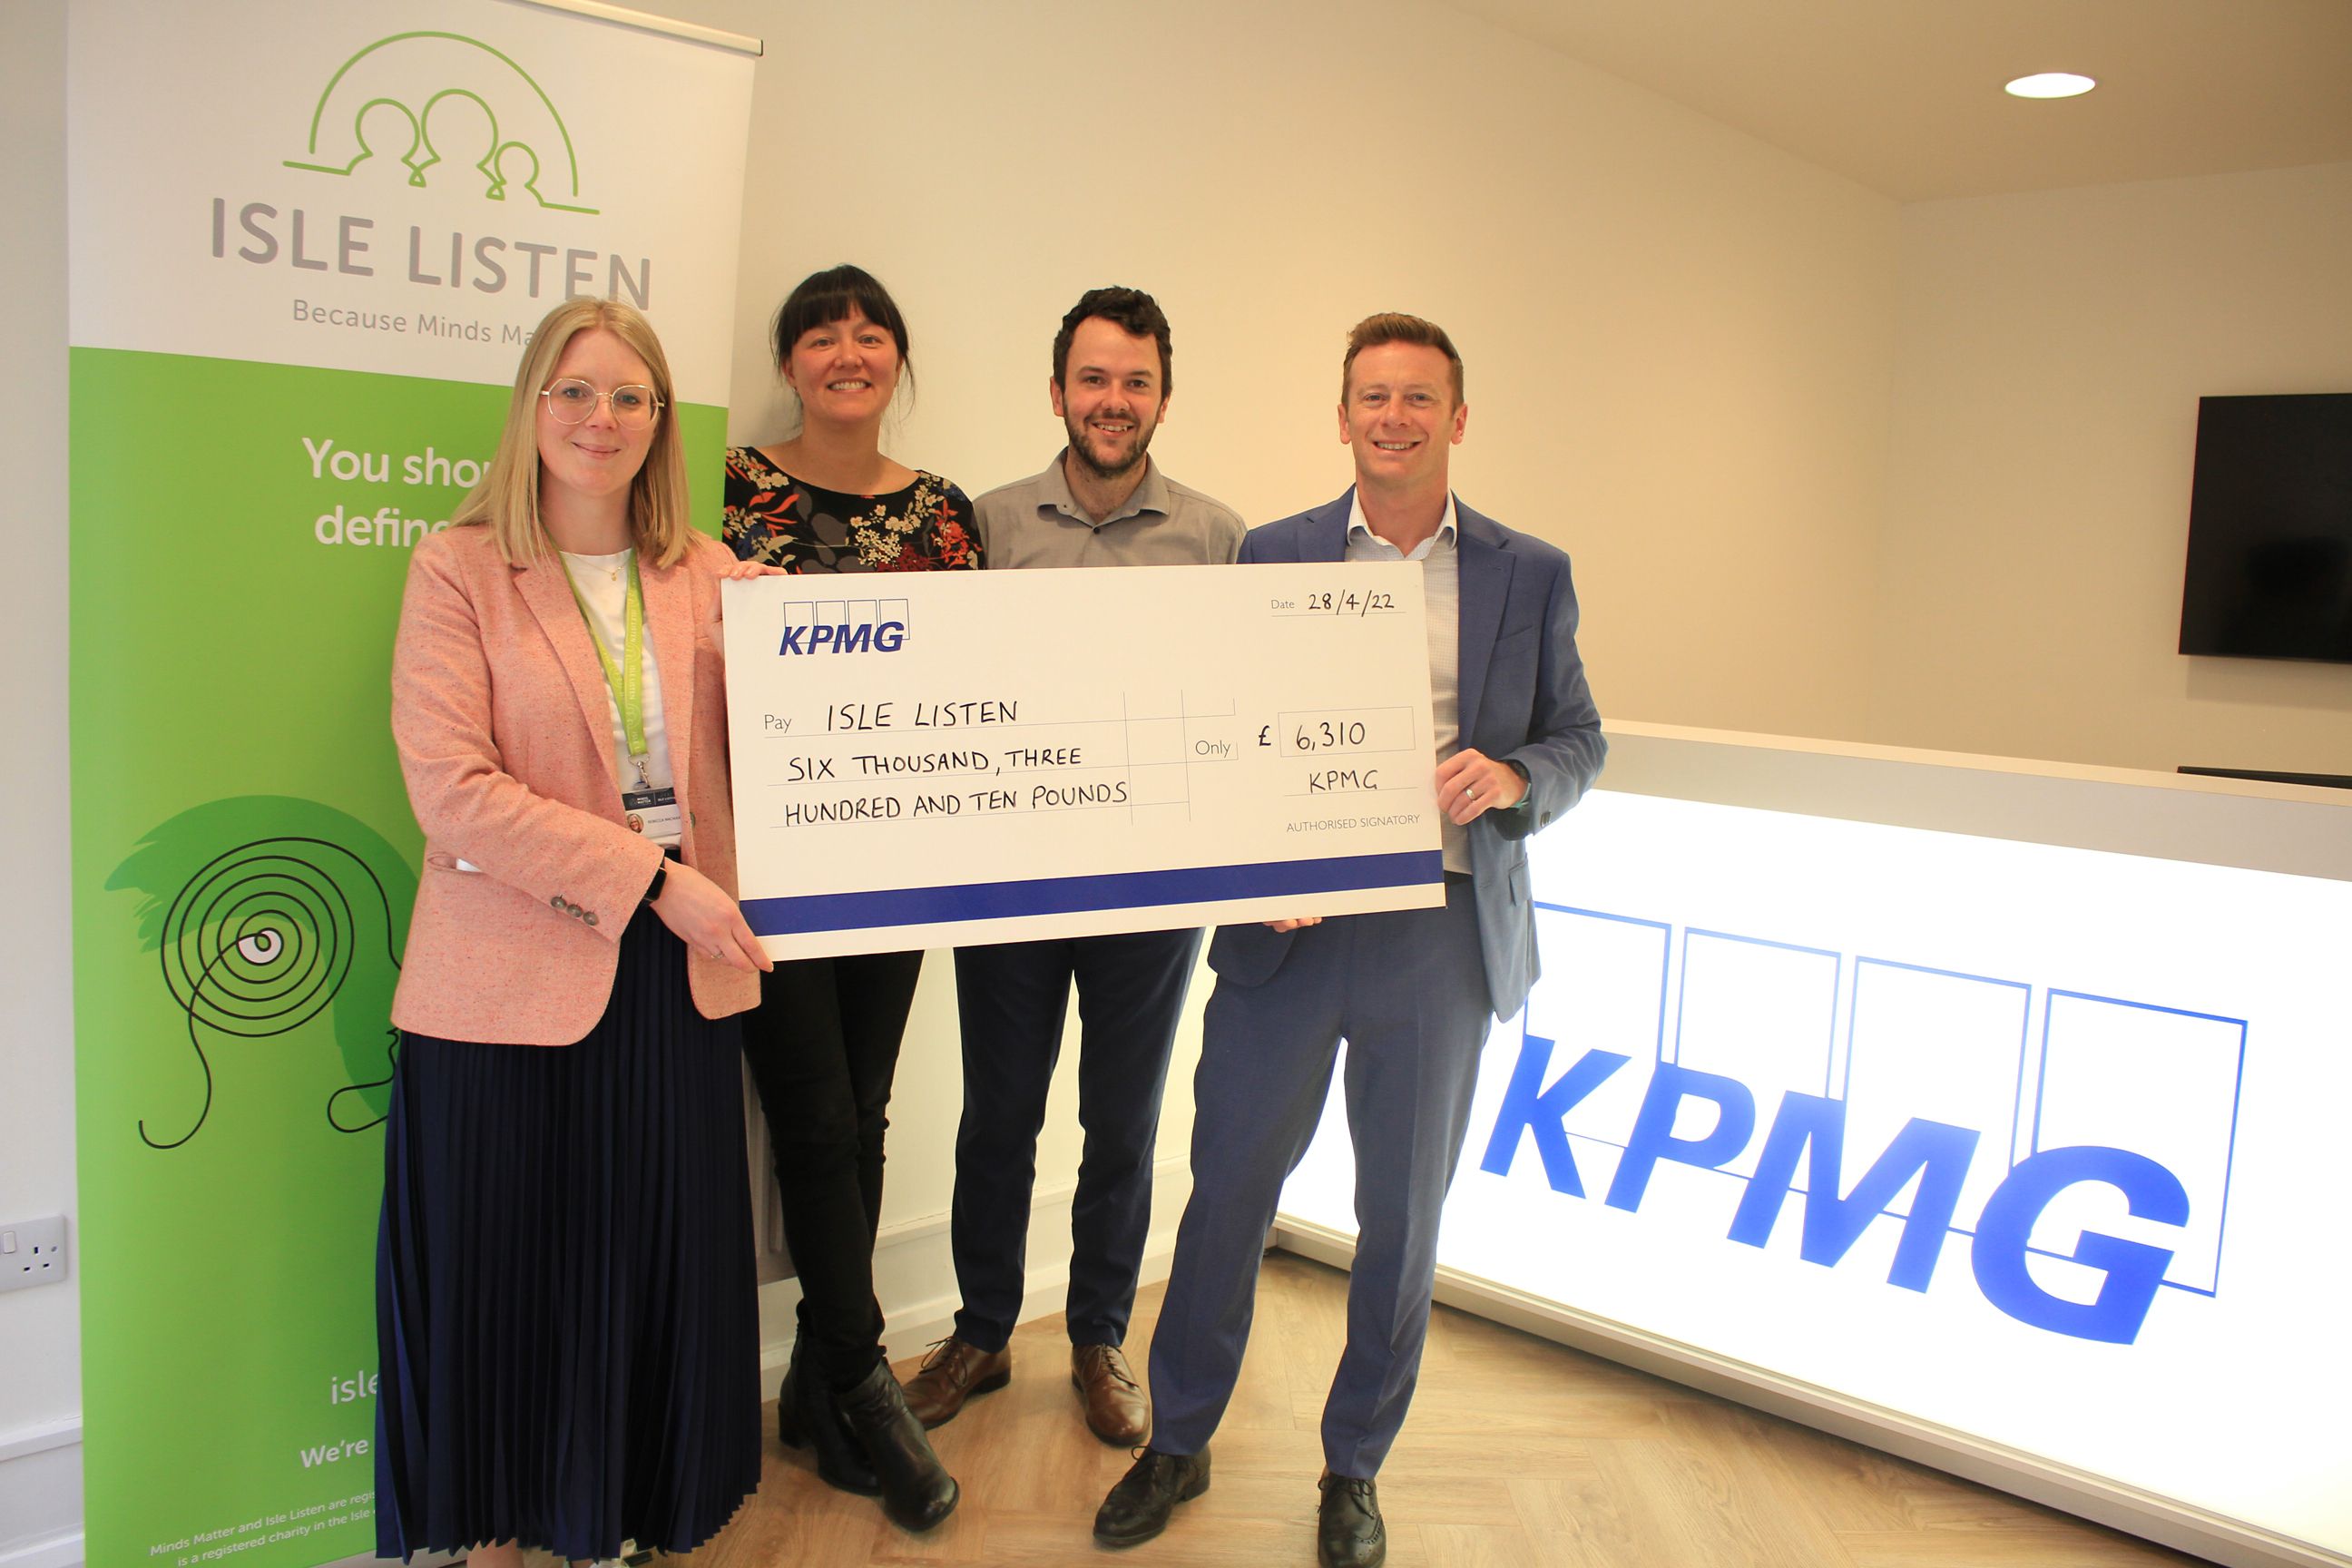 KPMG charity committee staff presenting the cheque to Isle Listen representative Rebecca Macnair